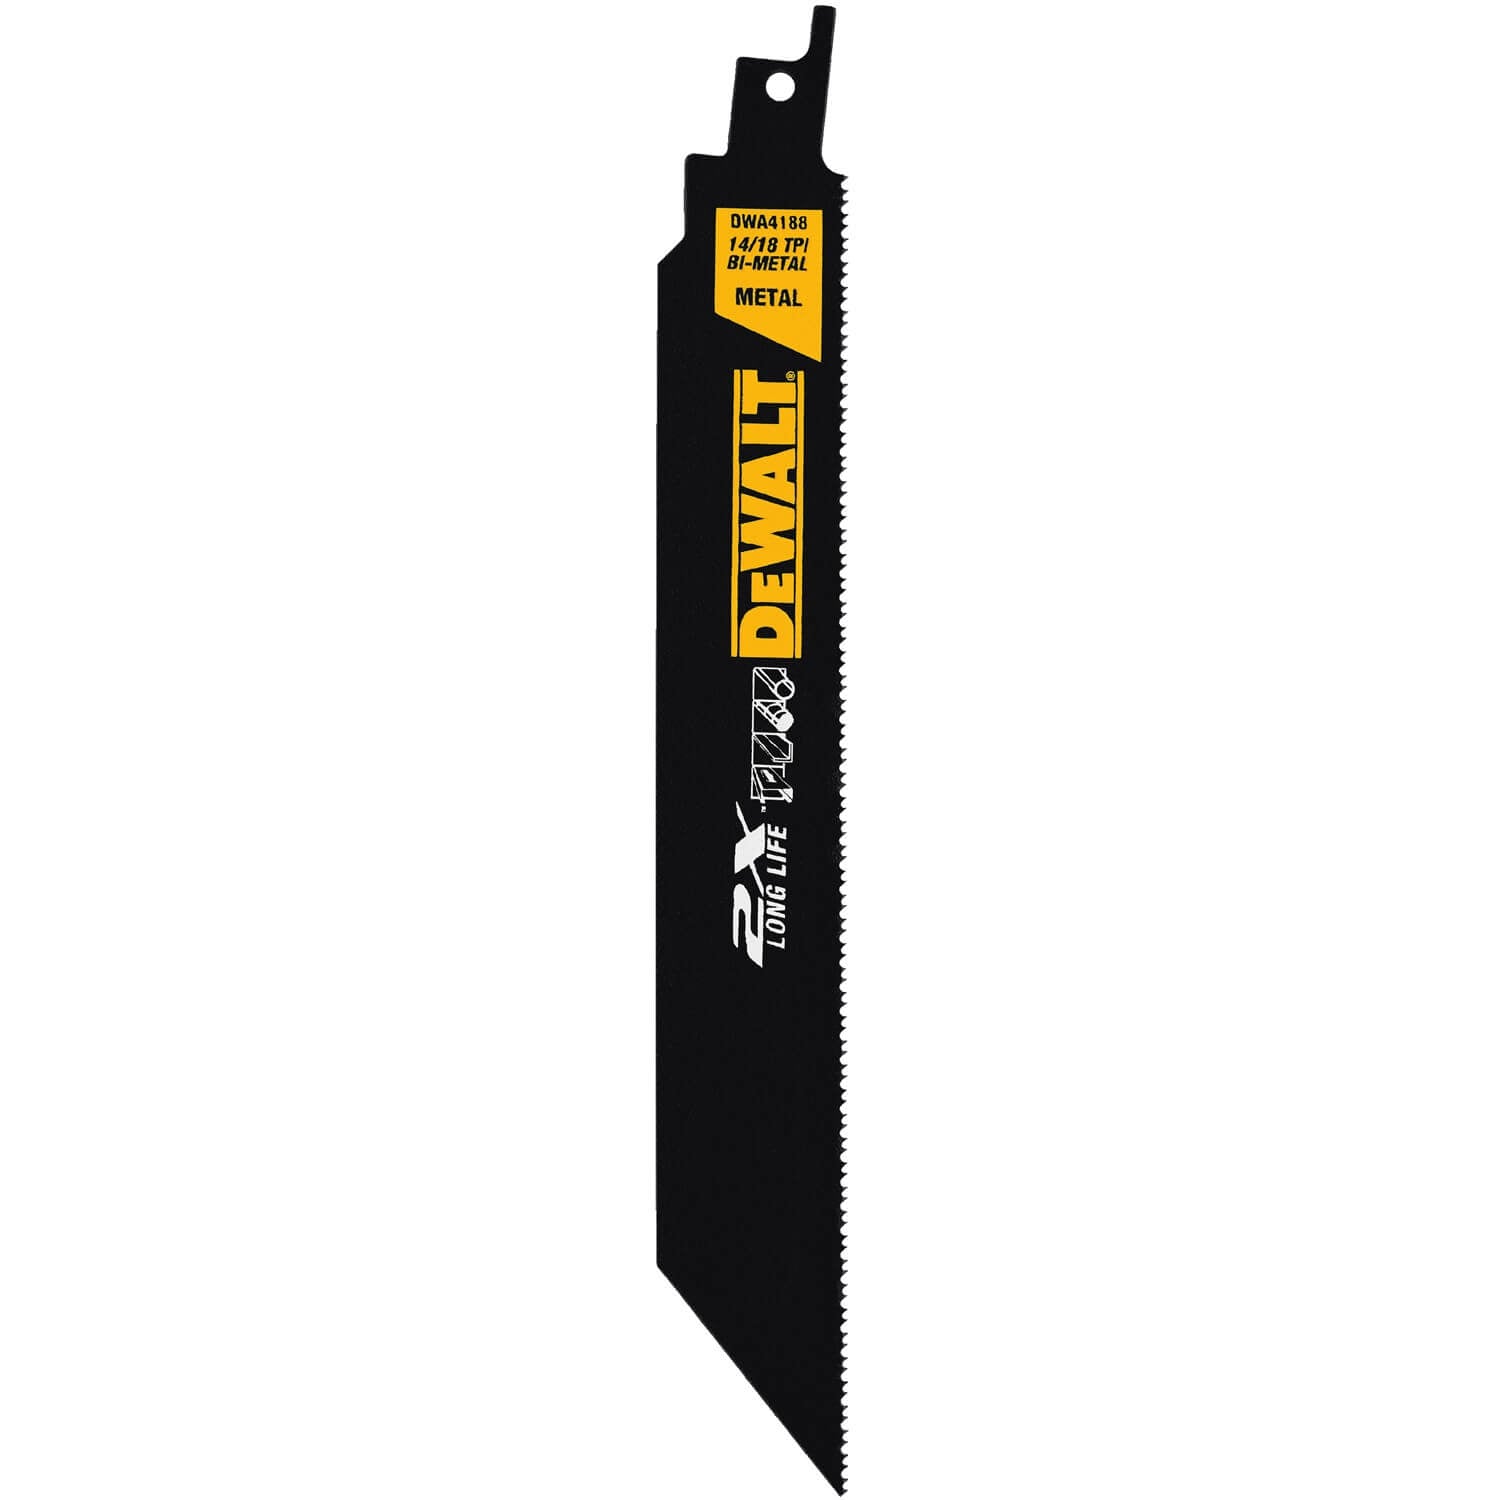 DEWALT DWA4188 - 14/18TPI Metal Cutting Recip Blade - wise-line-tools